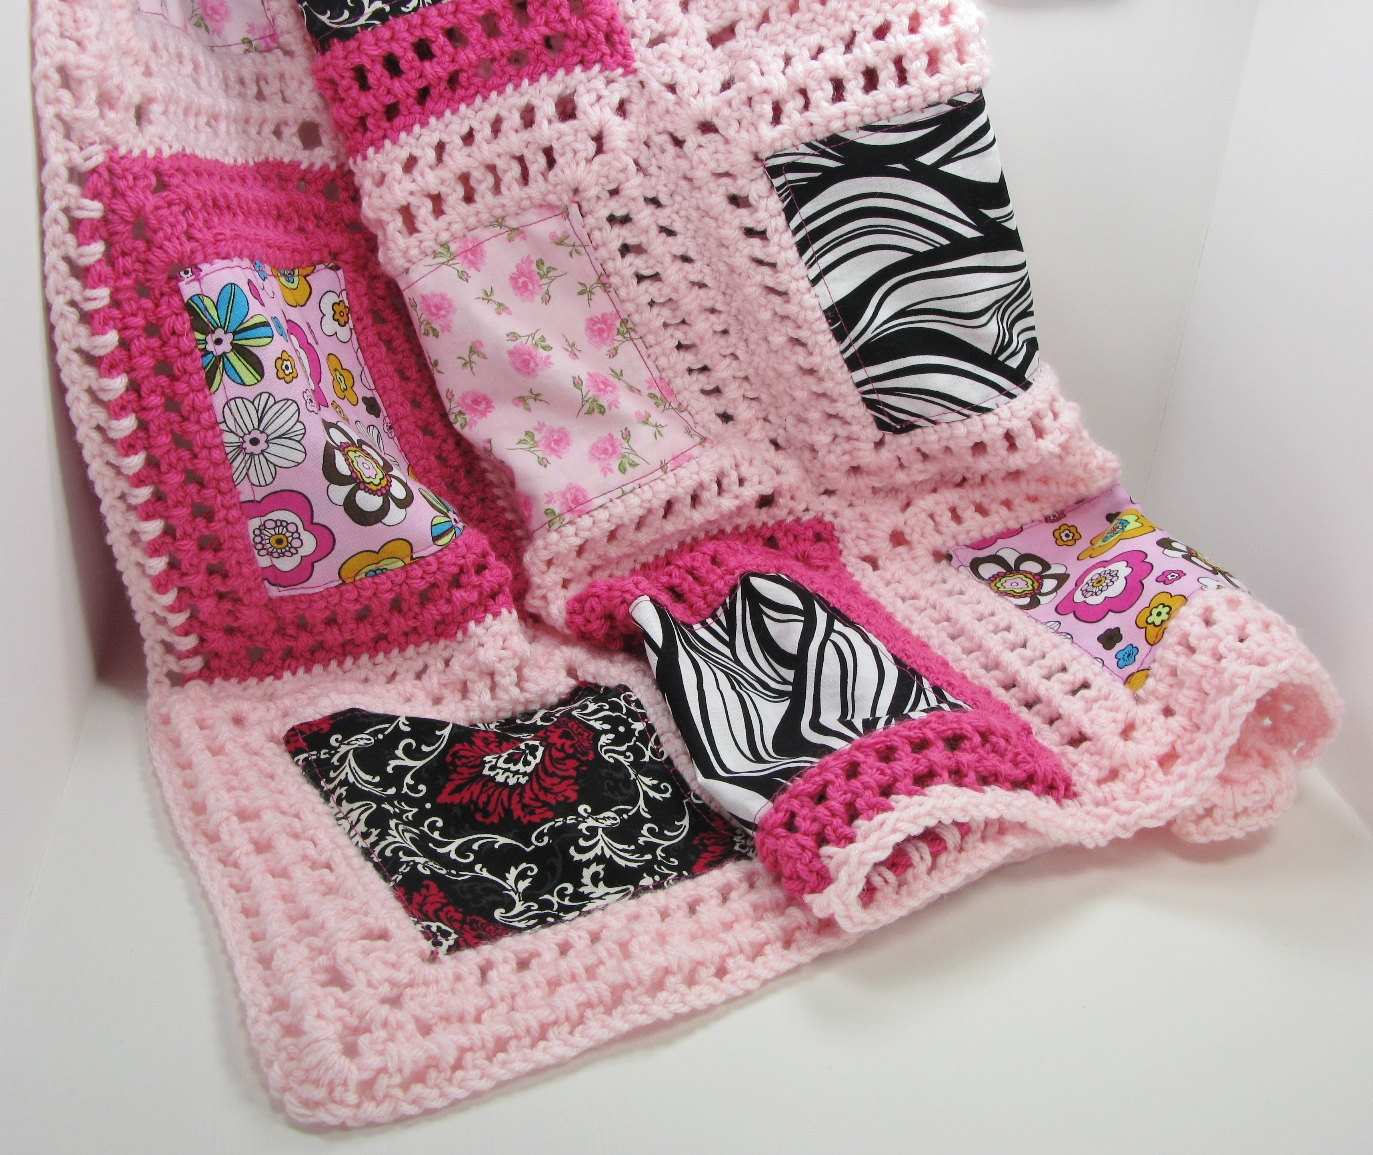 Crochet baby blanket patterns free